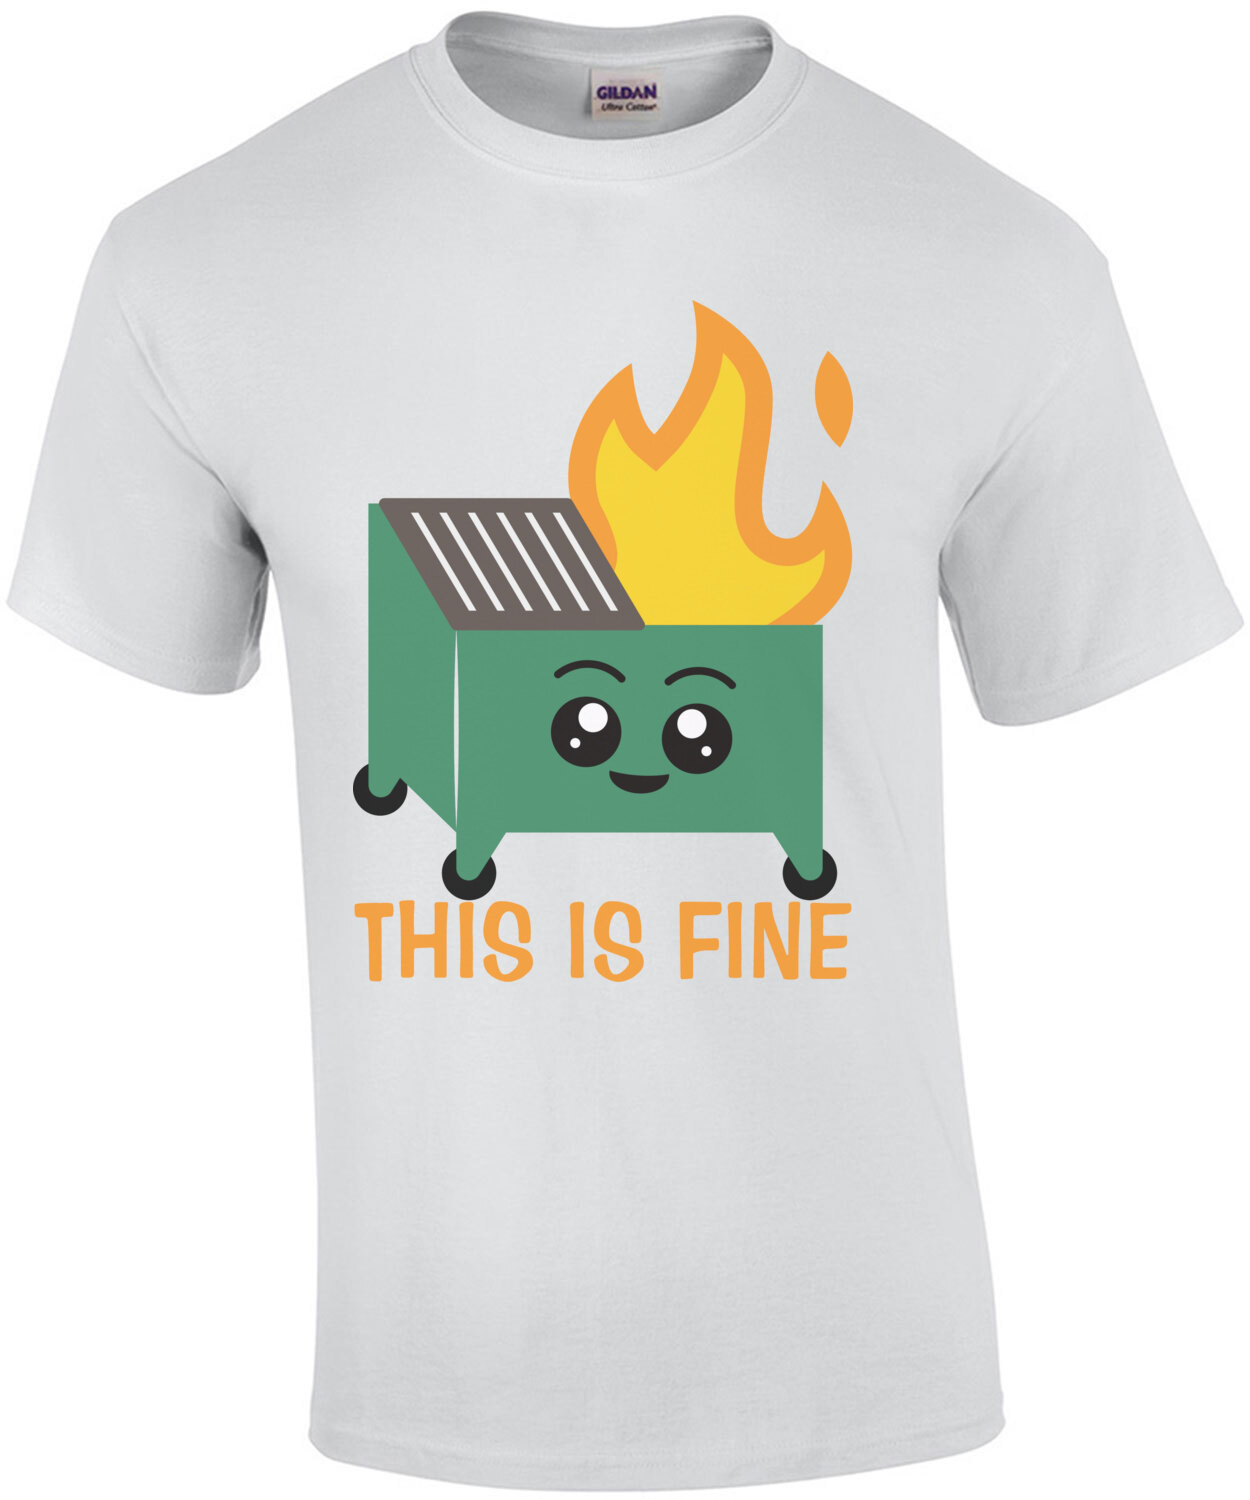 This is Fine Dumpster Fire Shirt